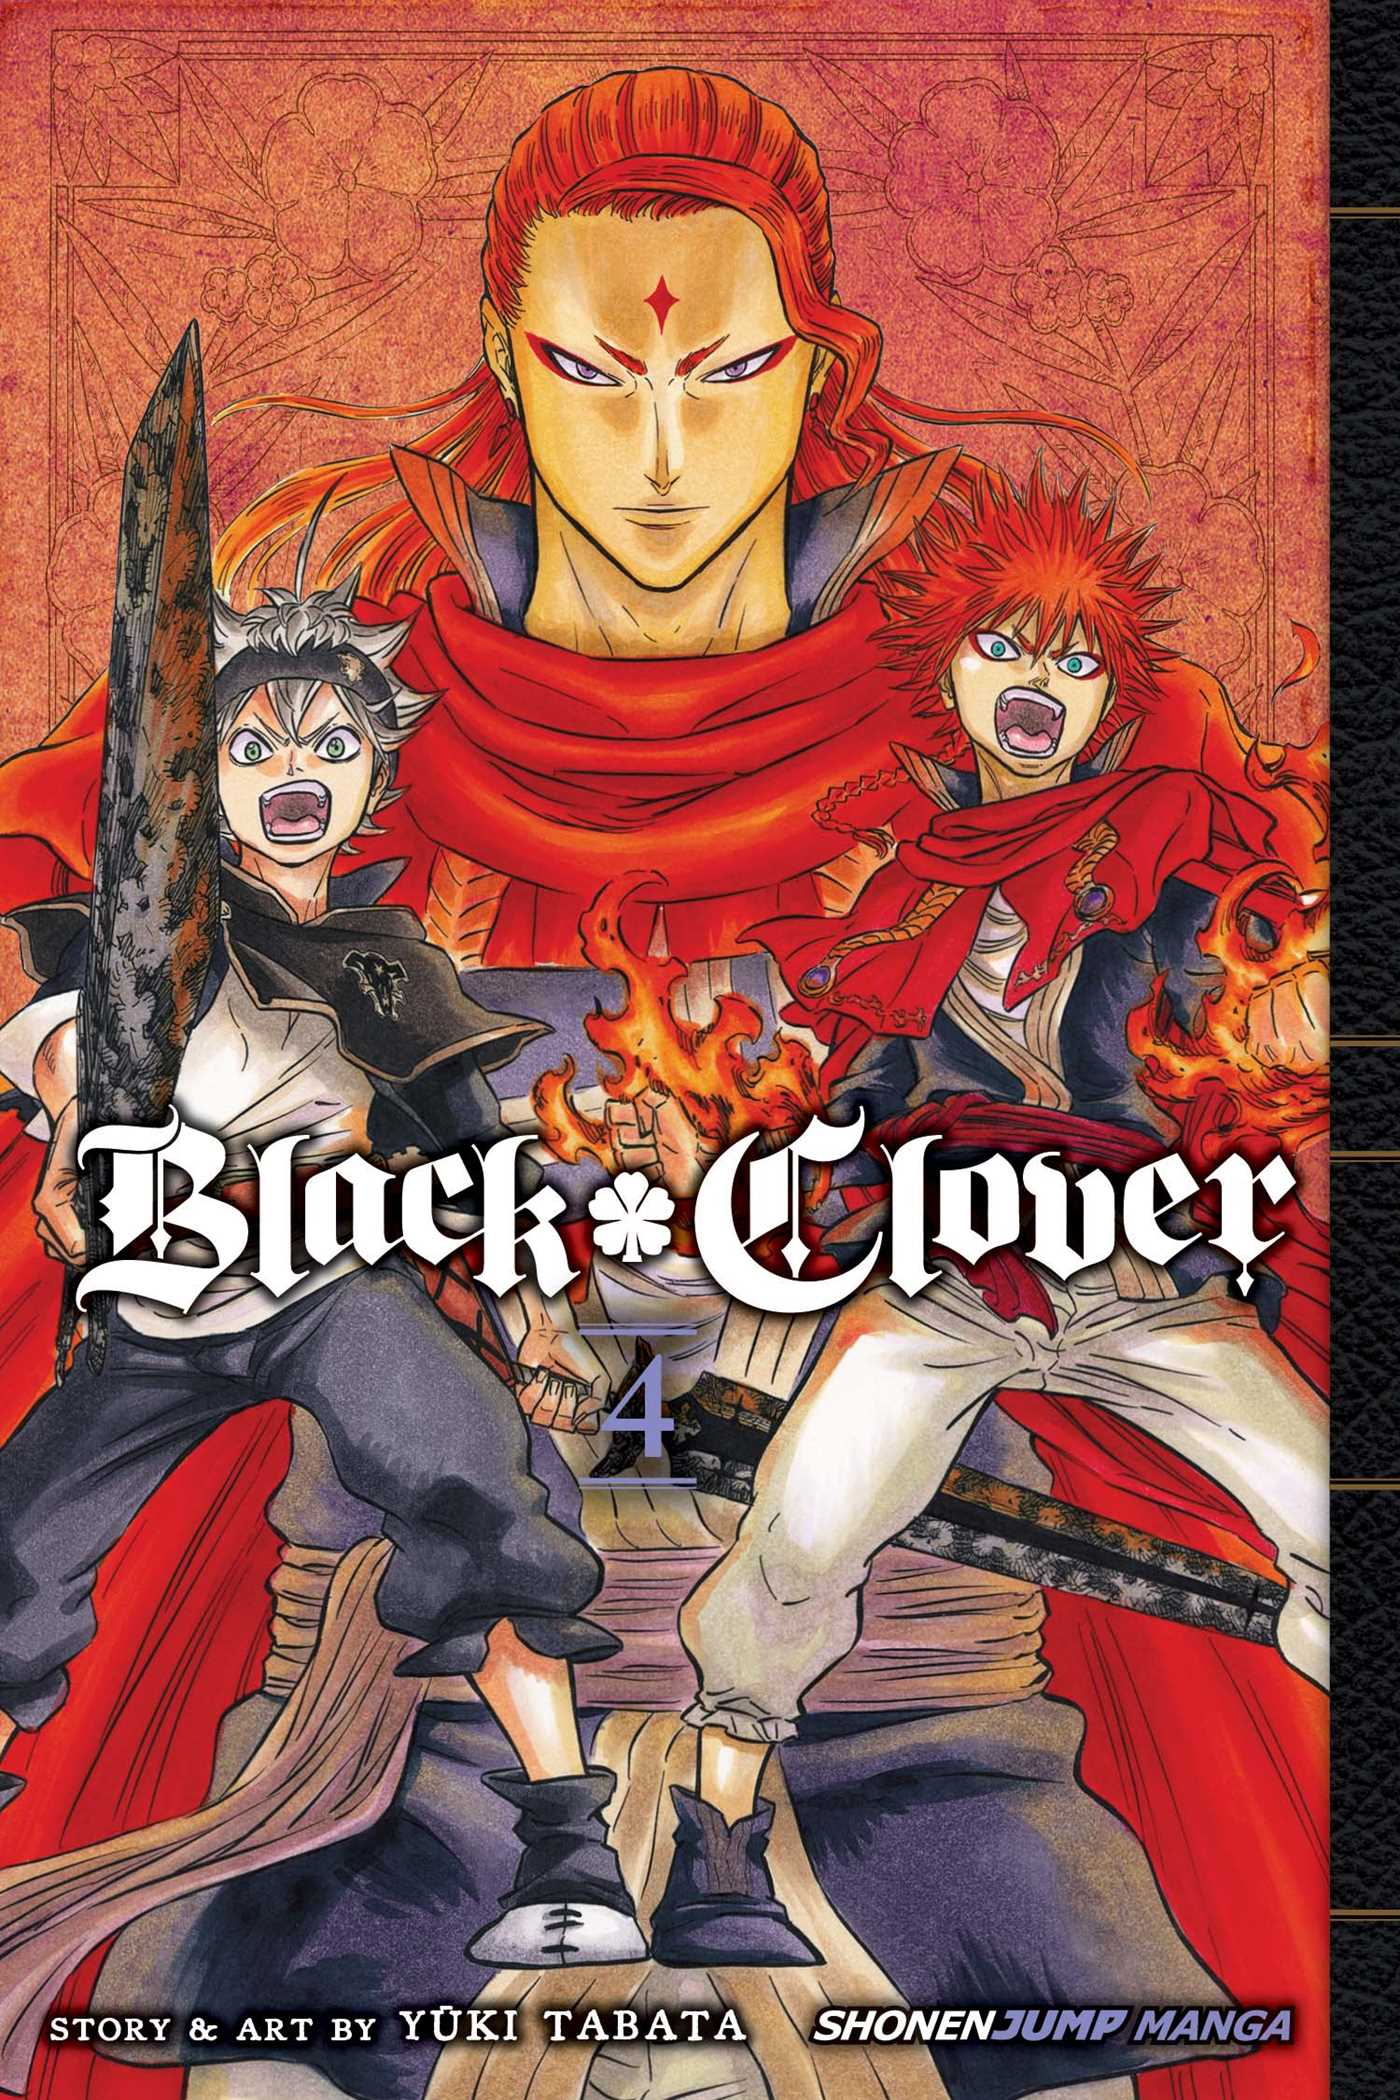 Black Clover Manga Volume 4 image count 0